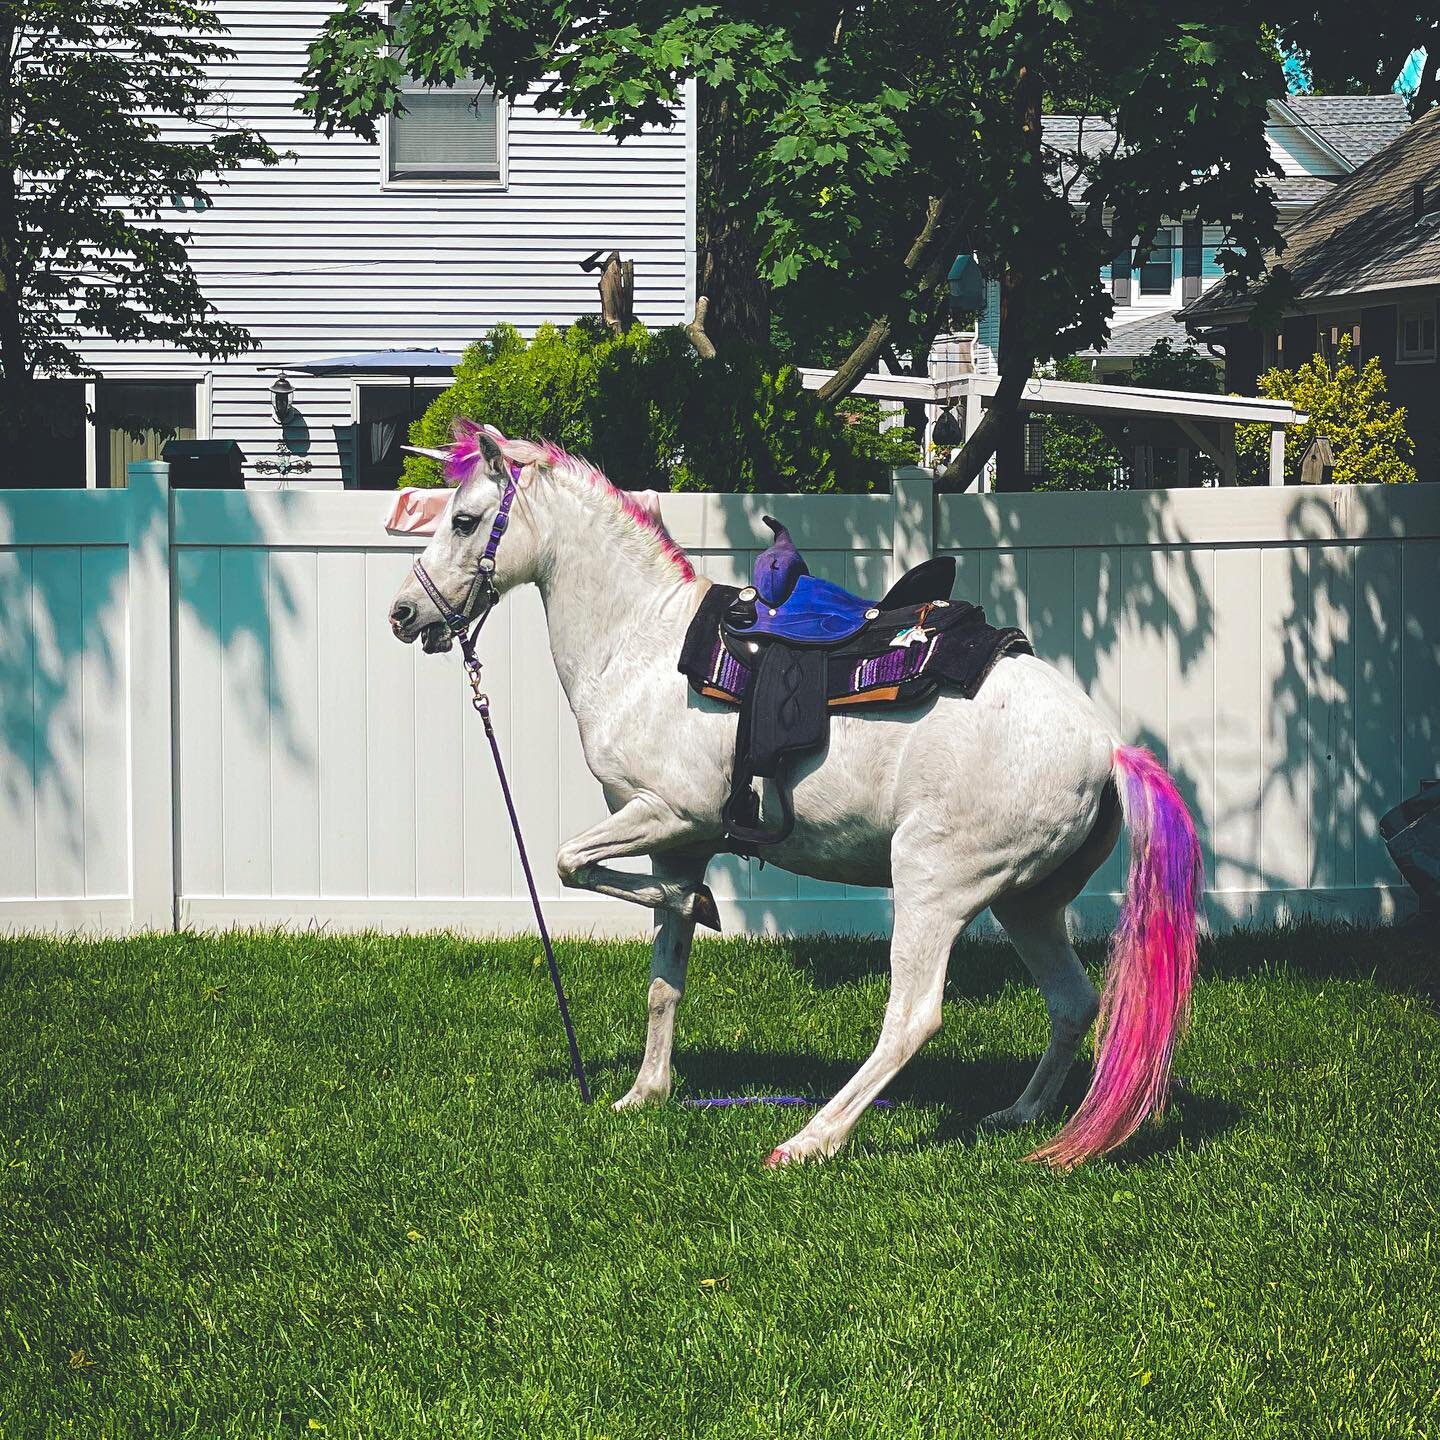 🦄Backyard Unicorn🦄
.
.
.
.
.
#unicorn #unicorns #rainbow #unicornparty #unicornlove #unicornio #pink #birthday #unicornstuff #unicornlovers #instagood #unicornlife #unicornios #kidsparty #glitter #instagram #pony